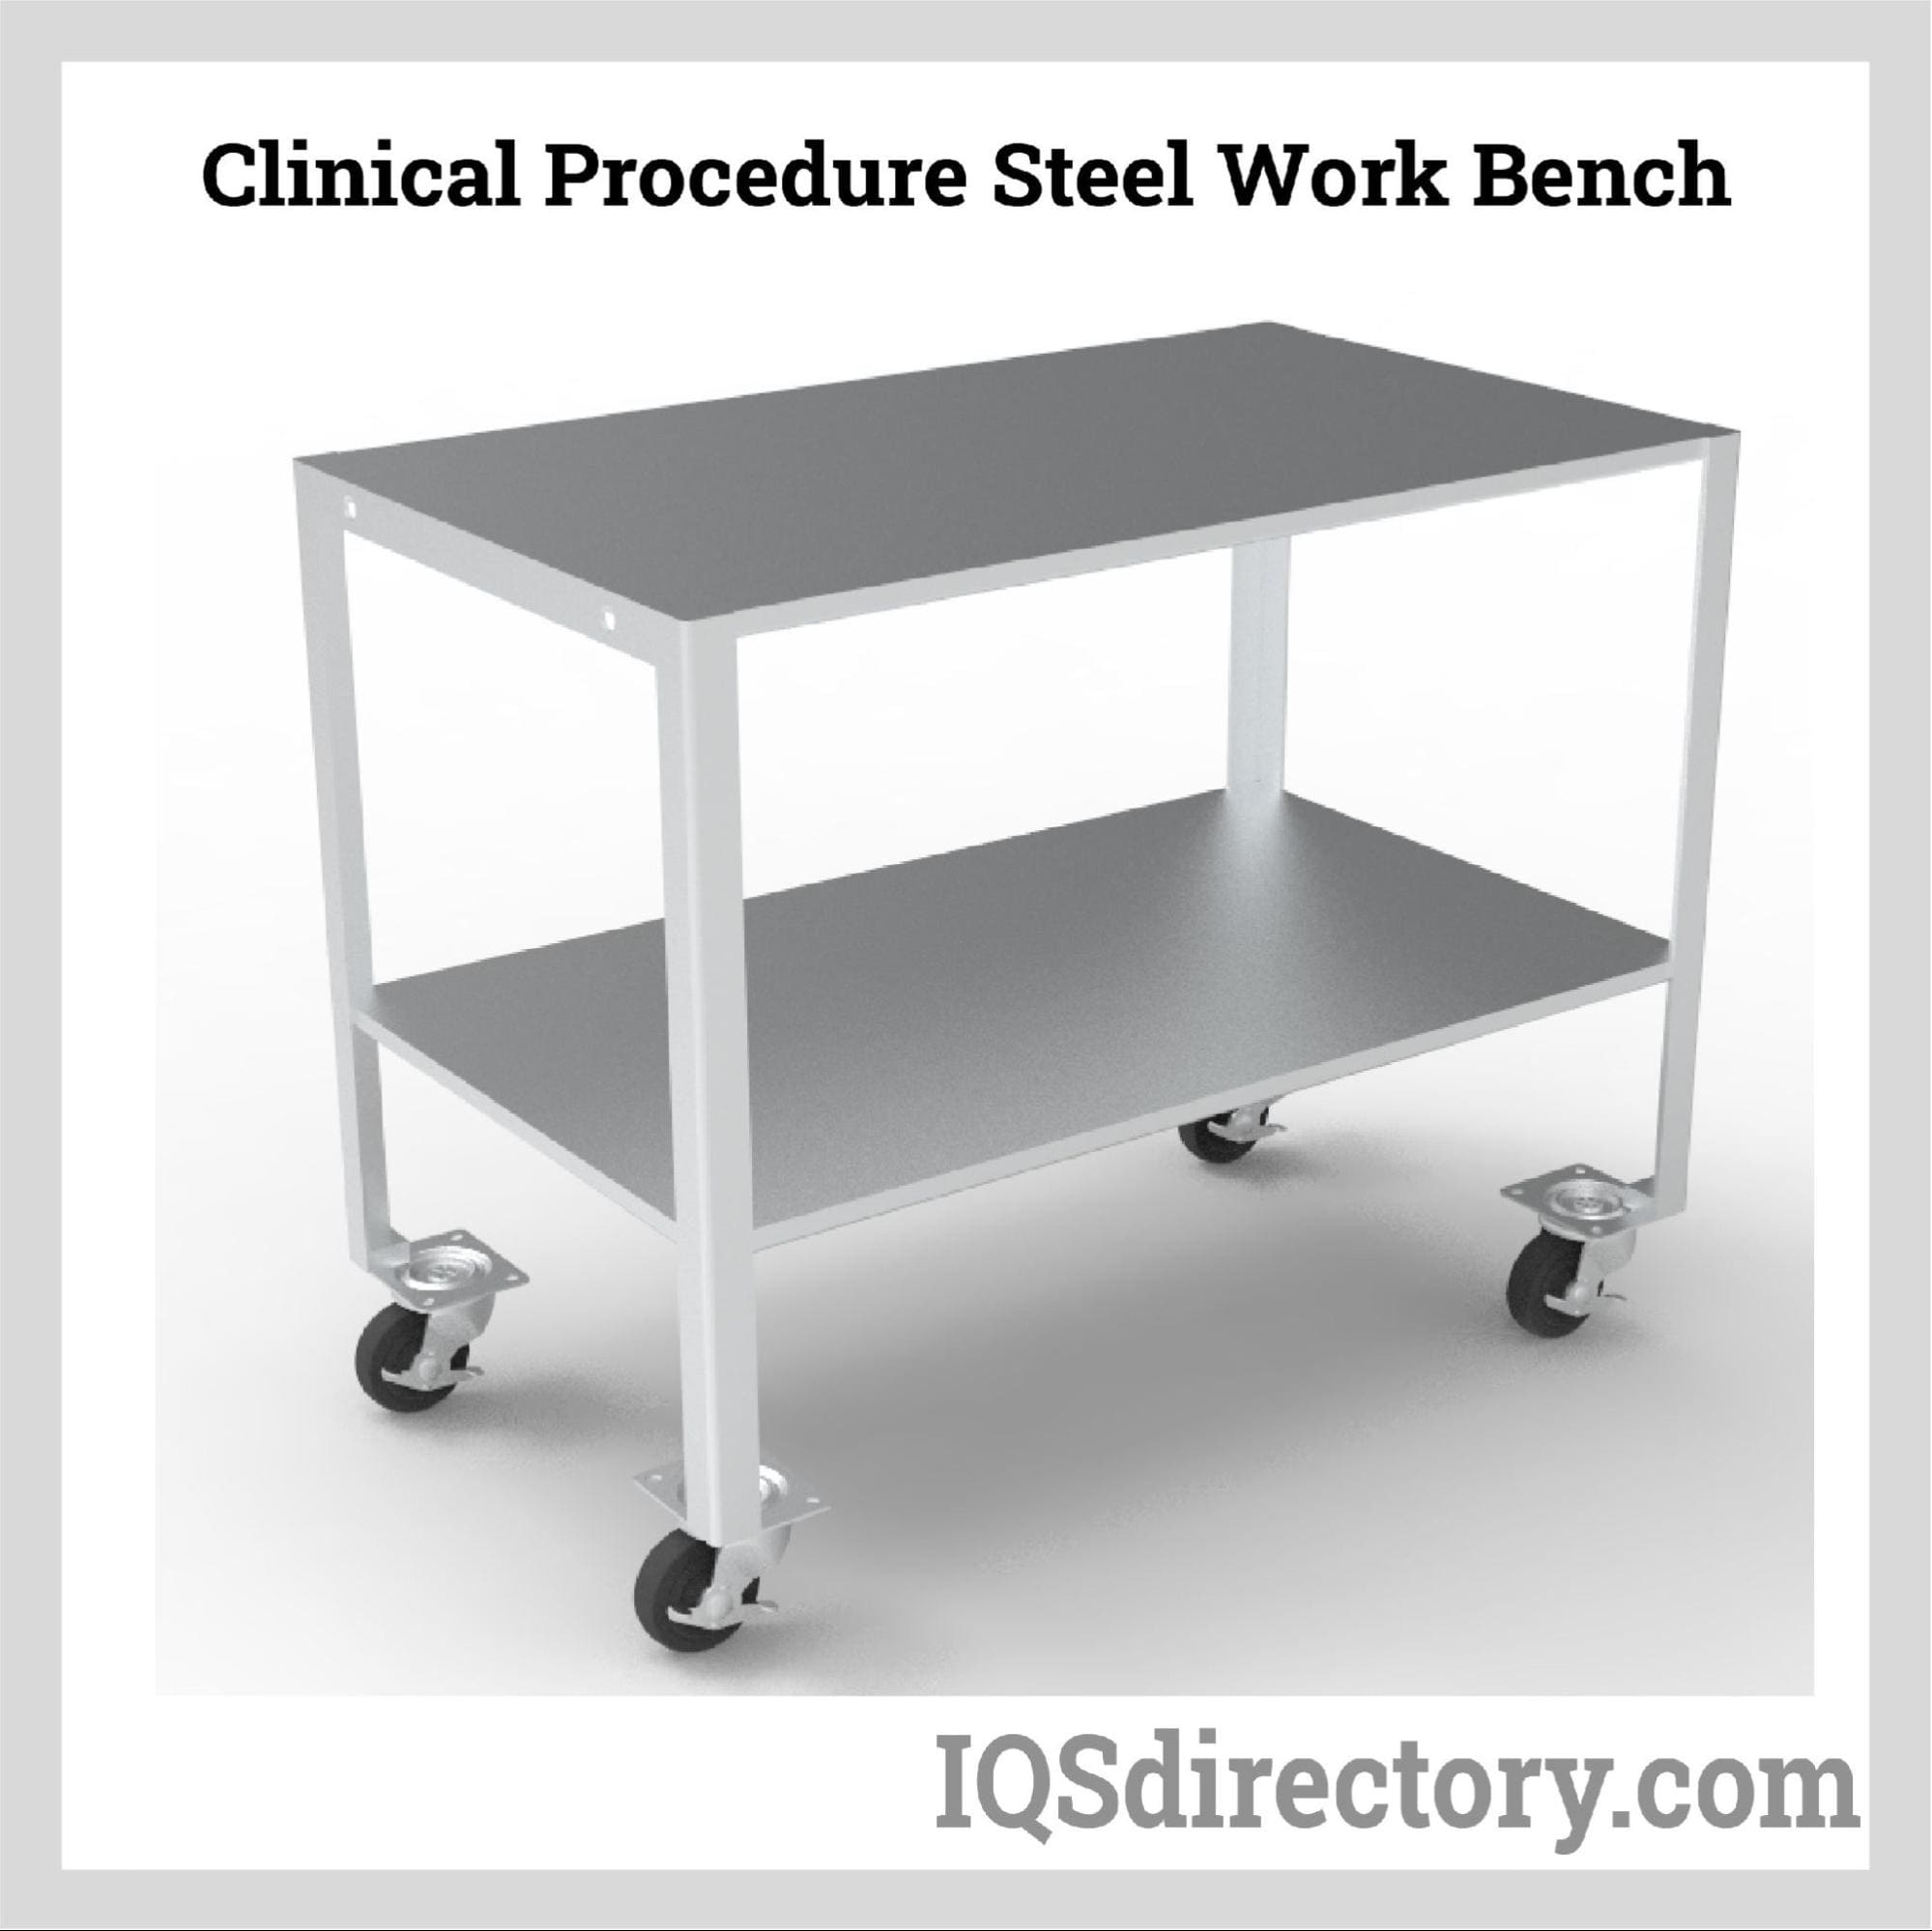 Clinical Procedure Steel Work Bench